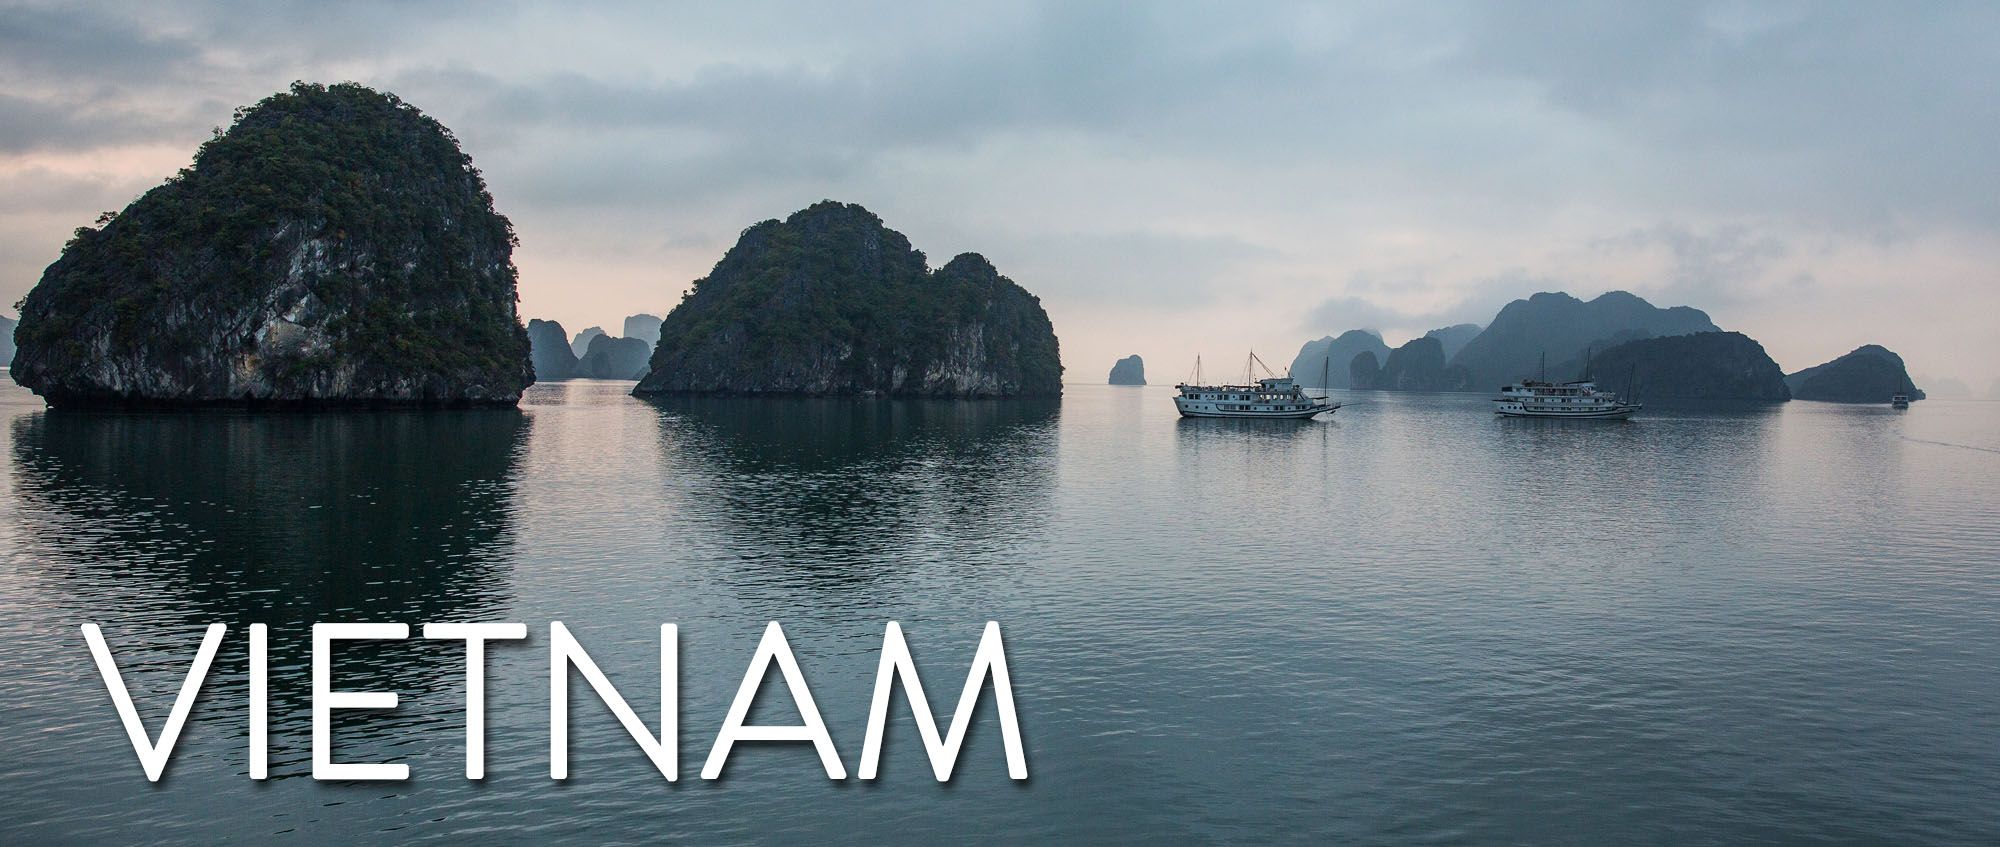 Vietnam Travel Guide